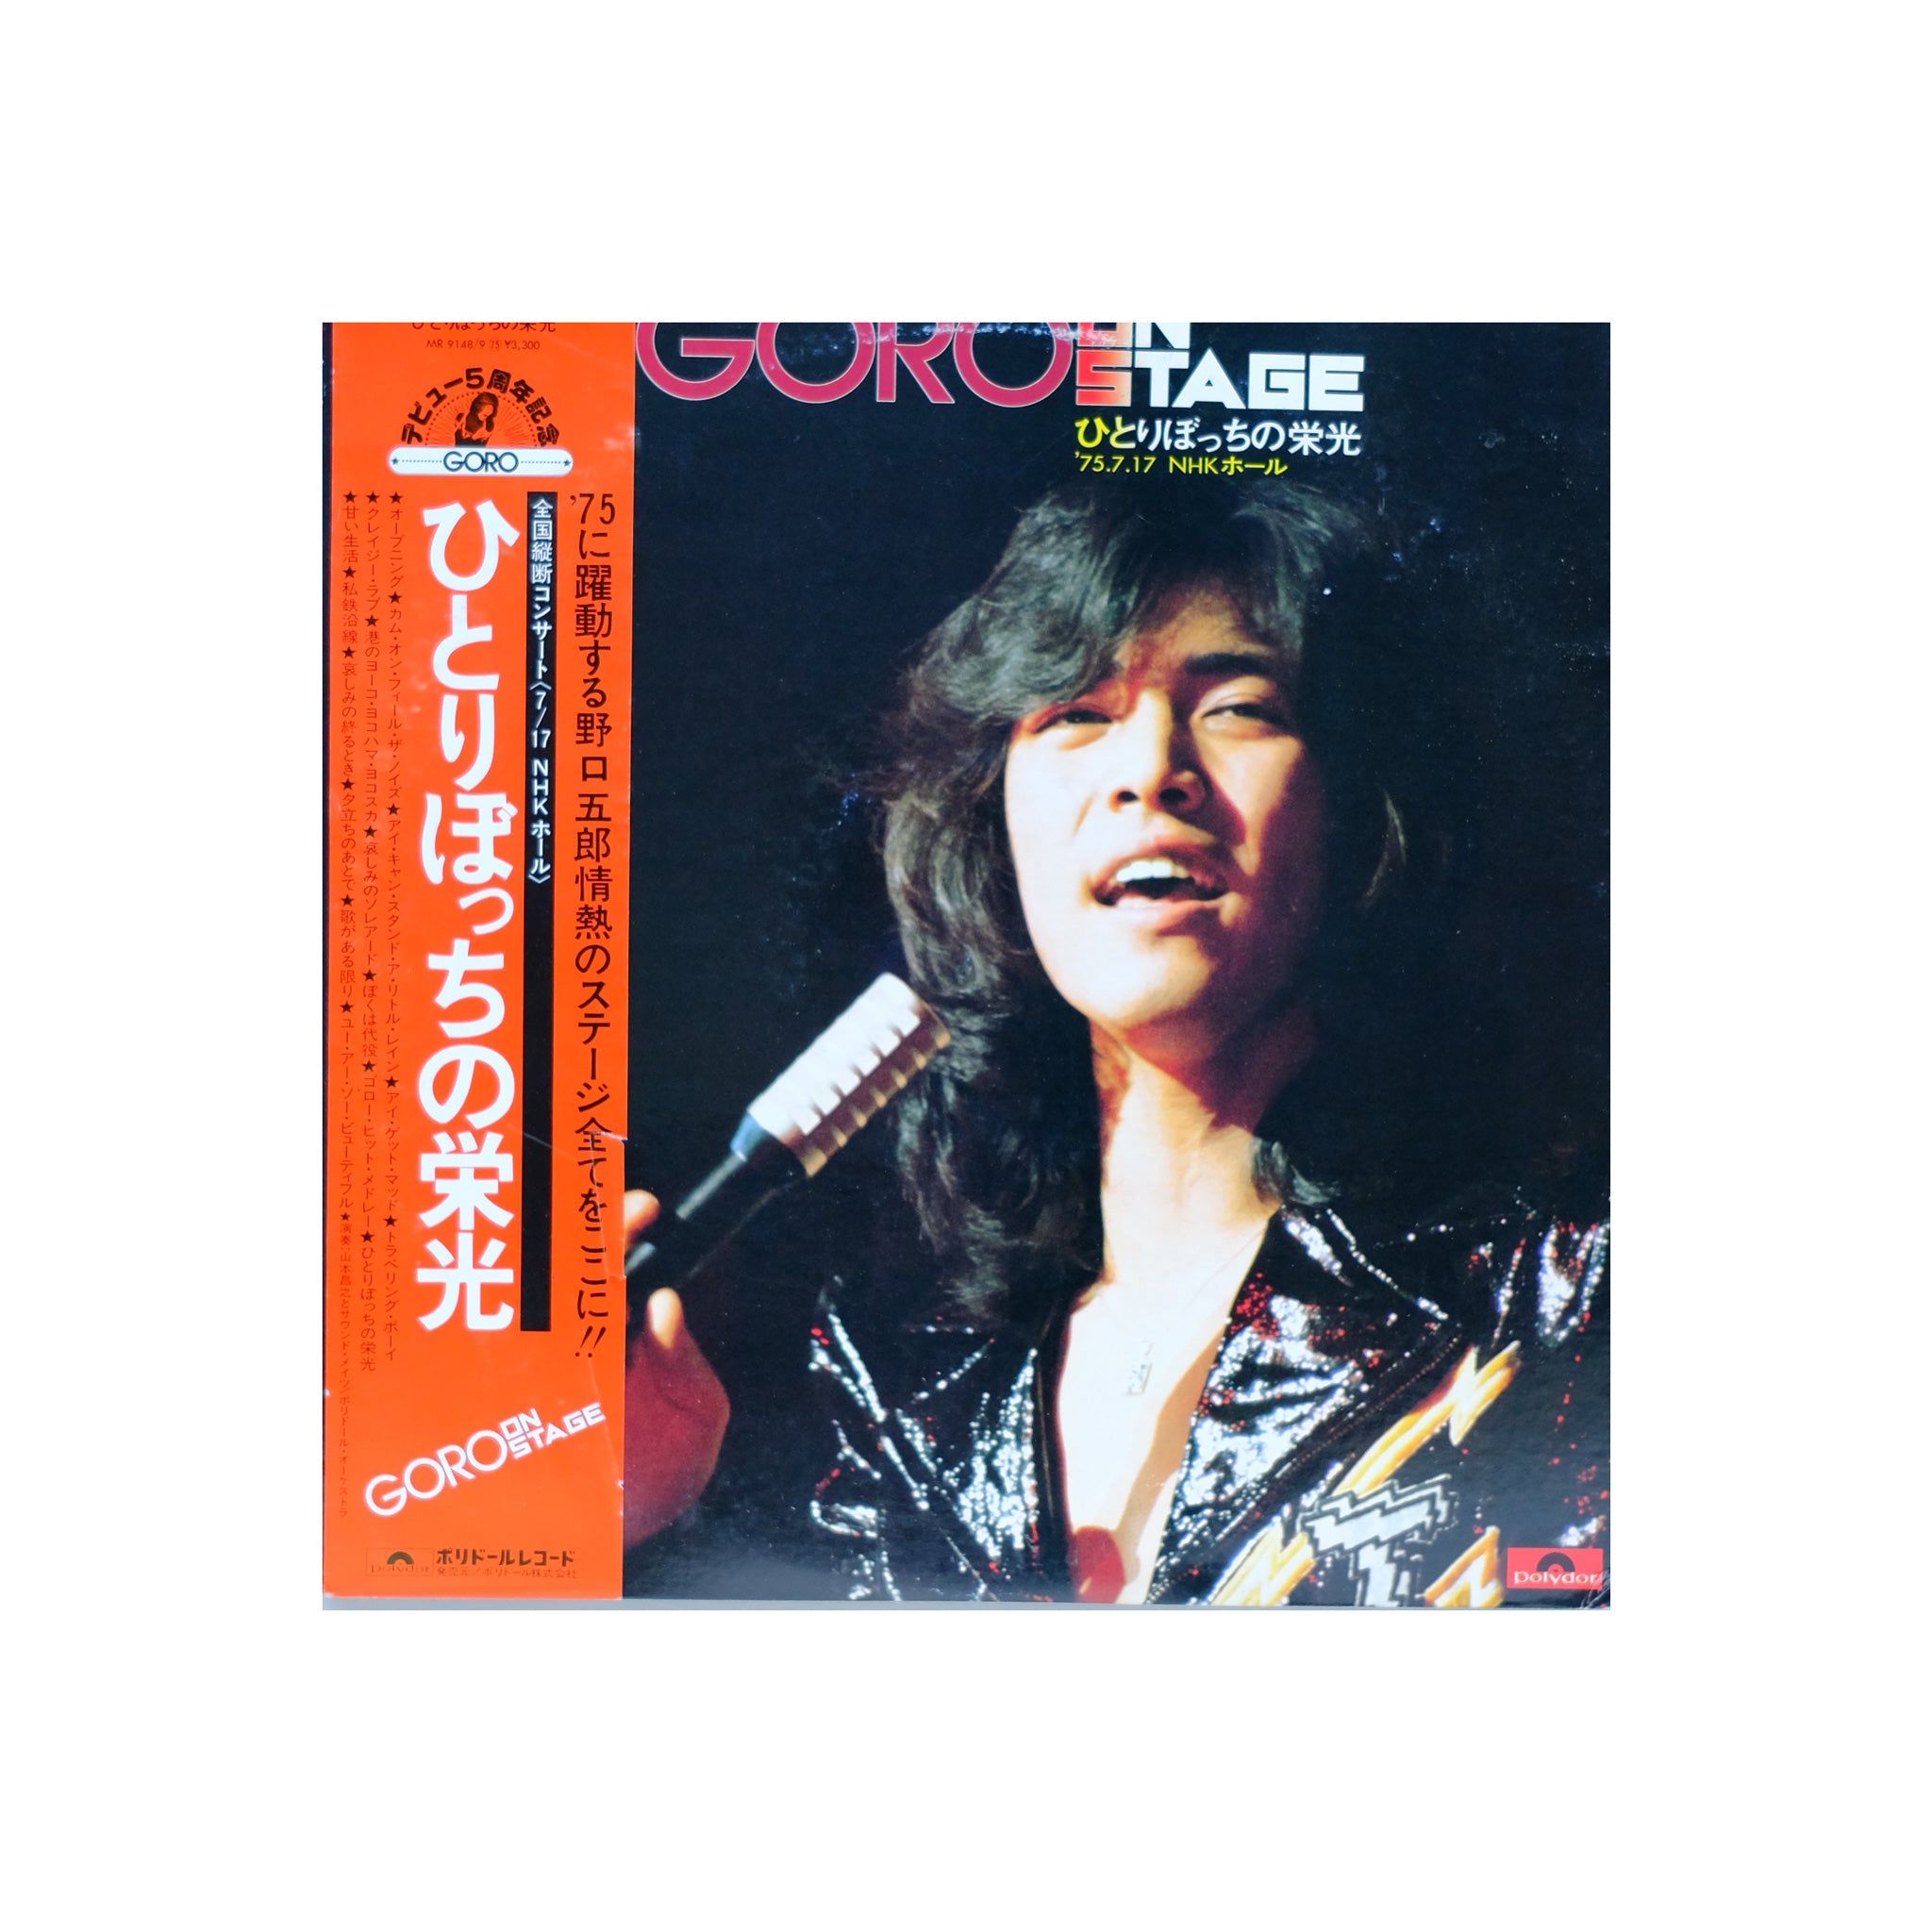 Goro Noguchi - On Stage 75.7.17 NHK Hall